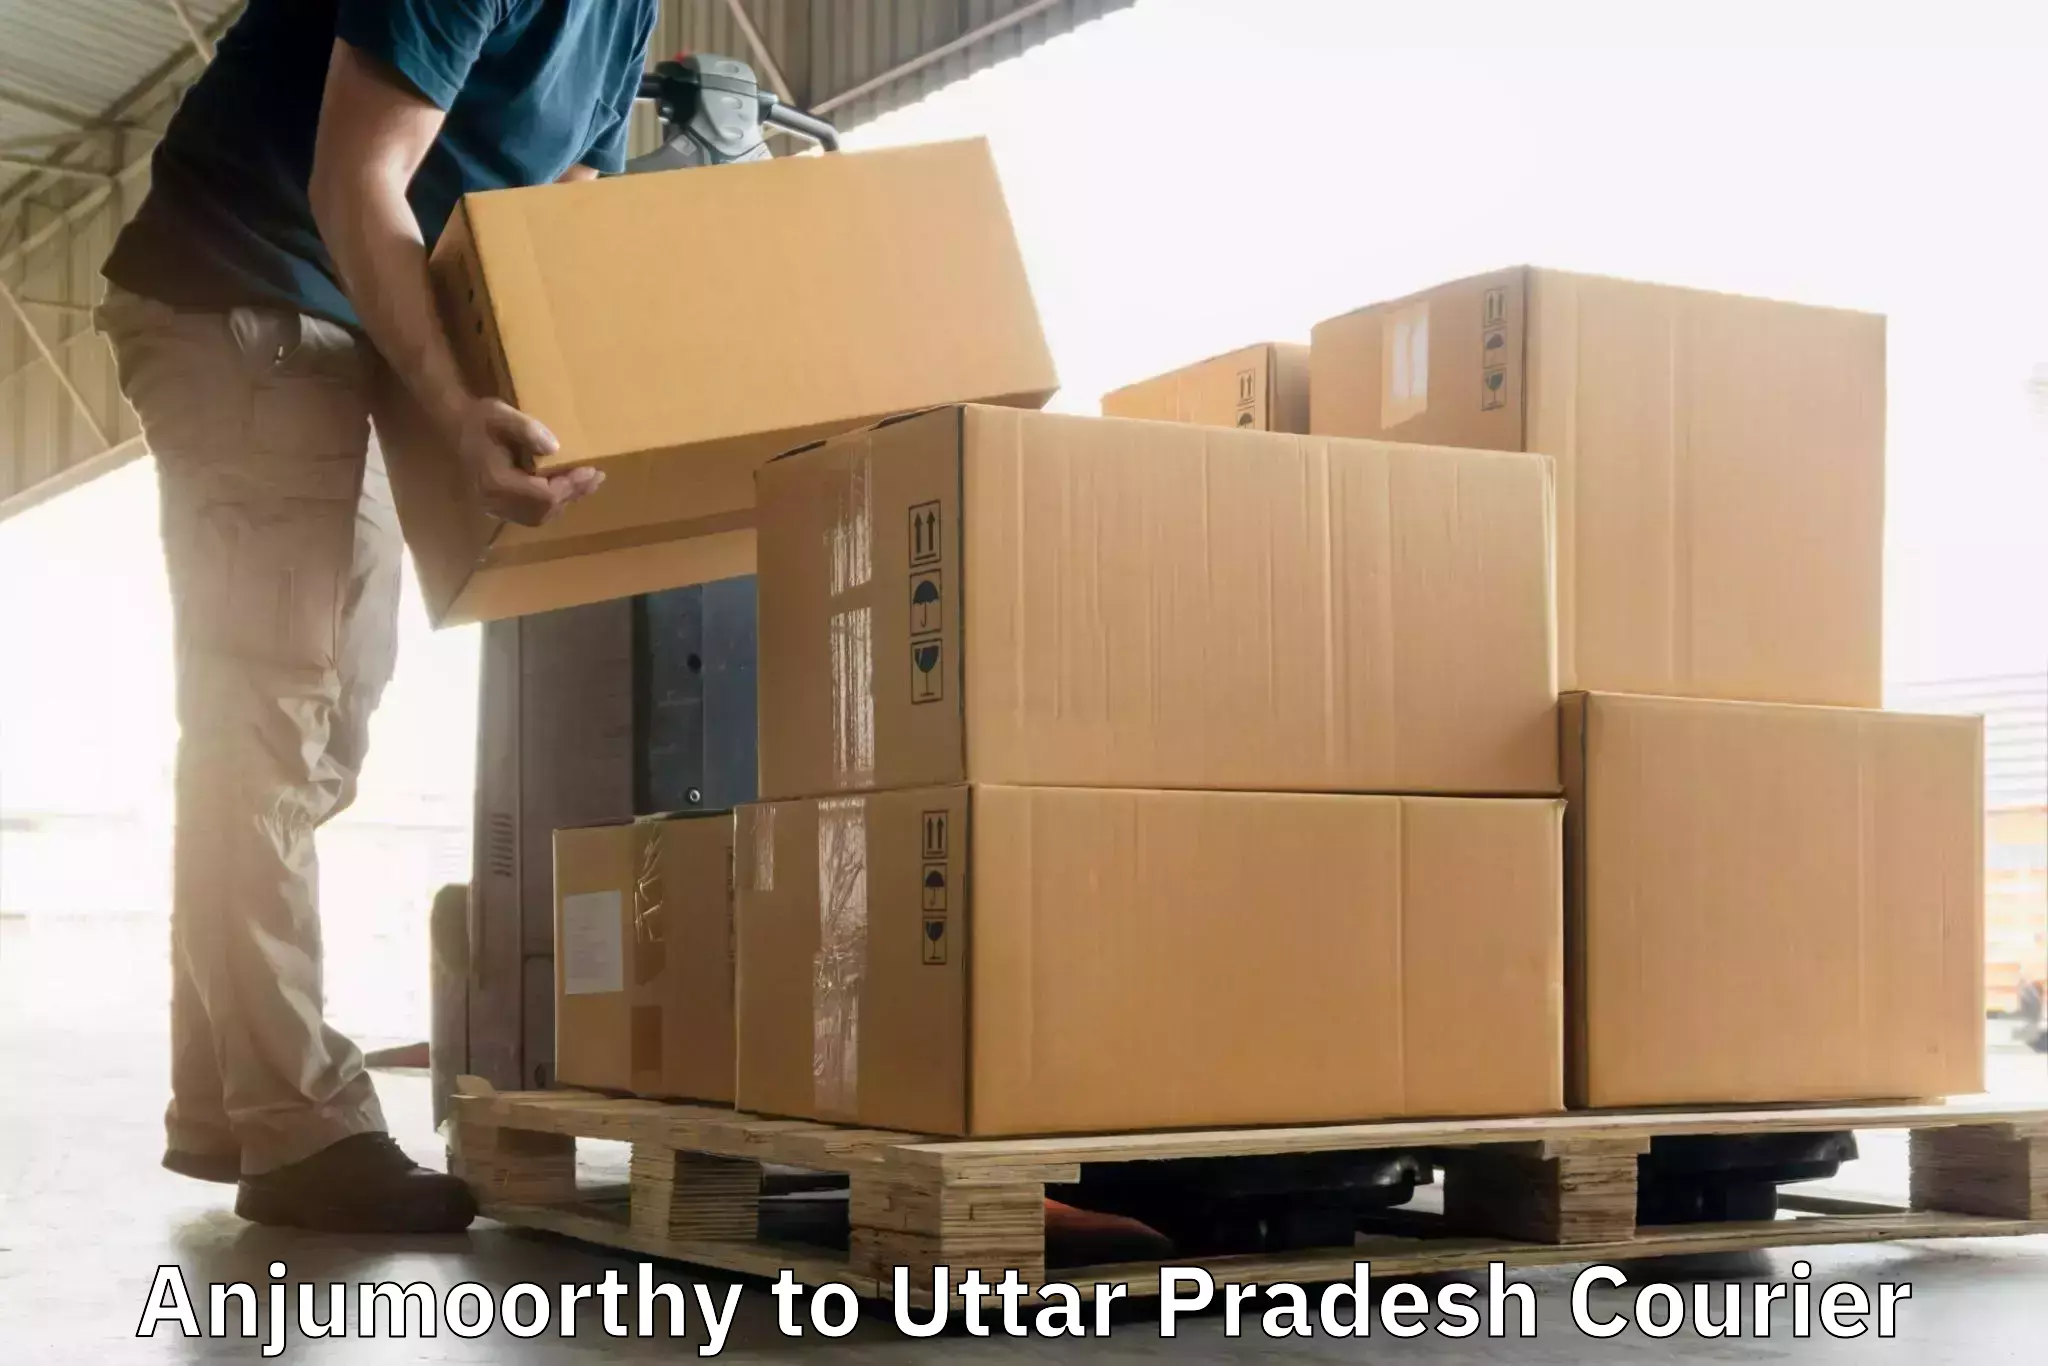 Cargo delivery service Anjumoorthy to Anpara